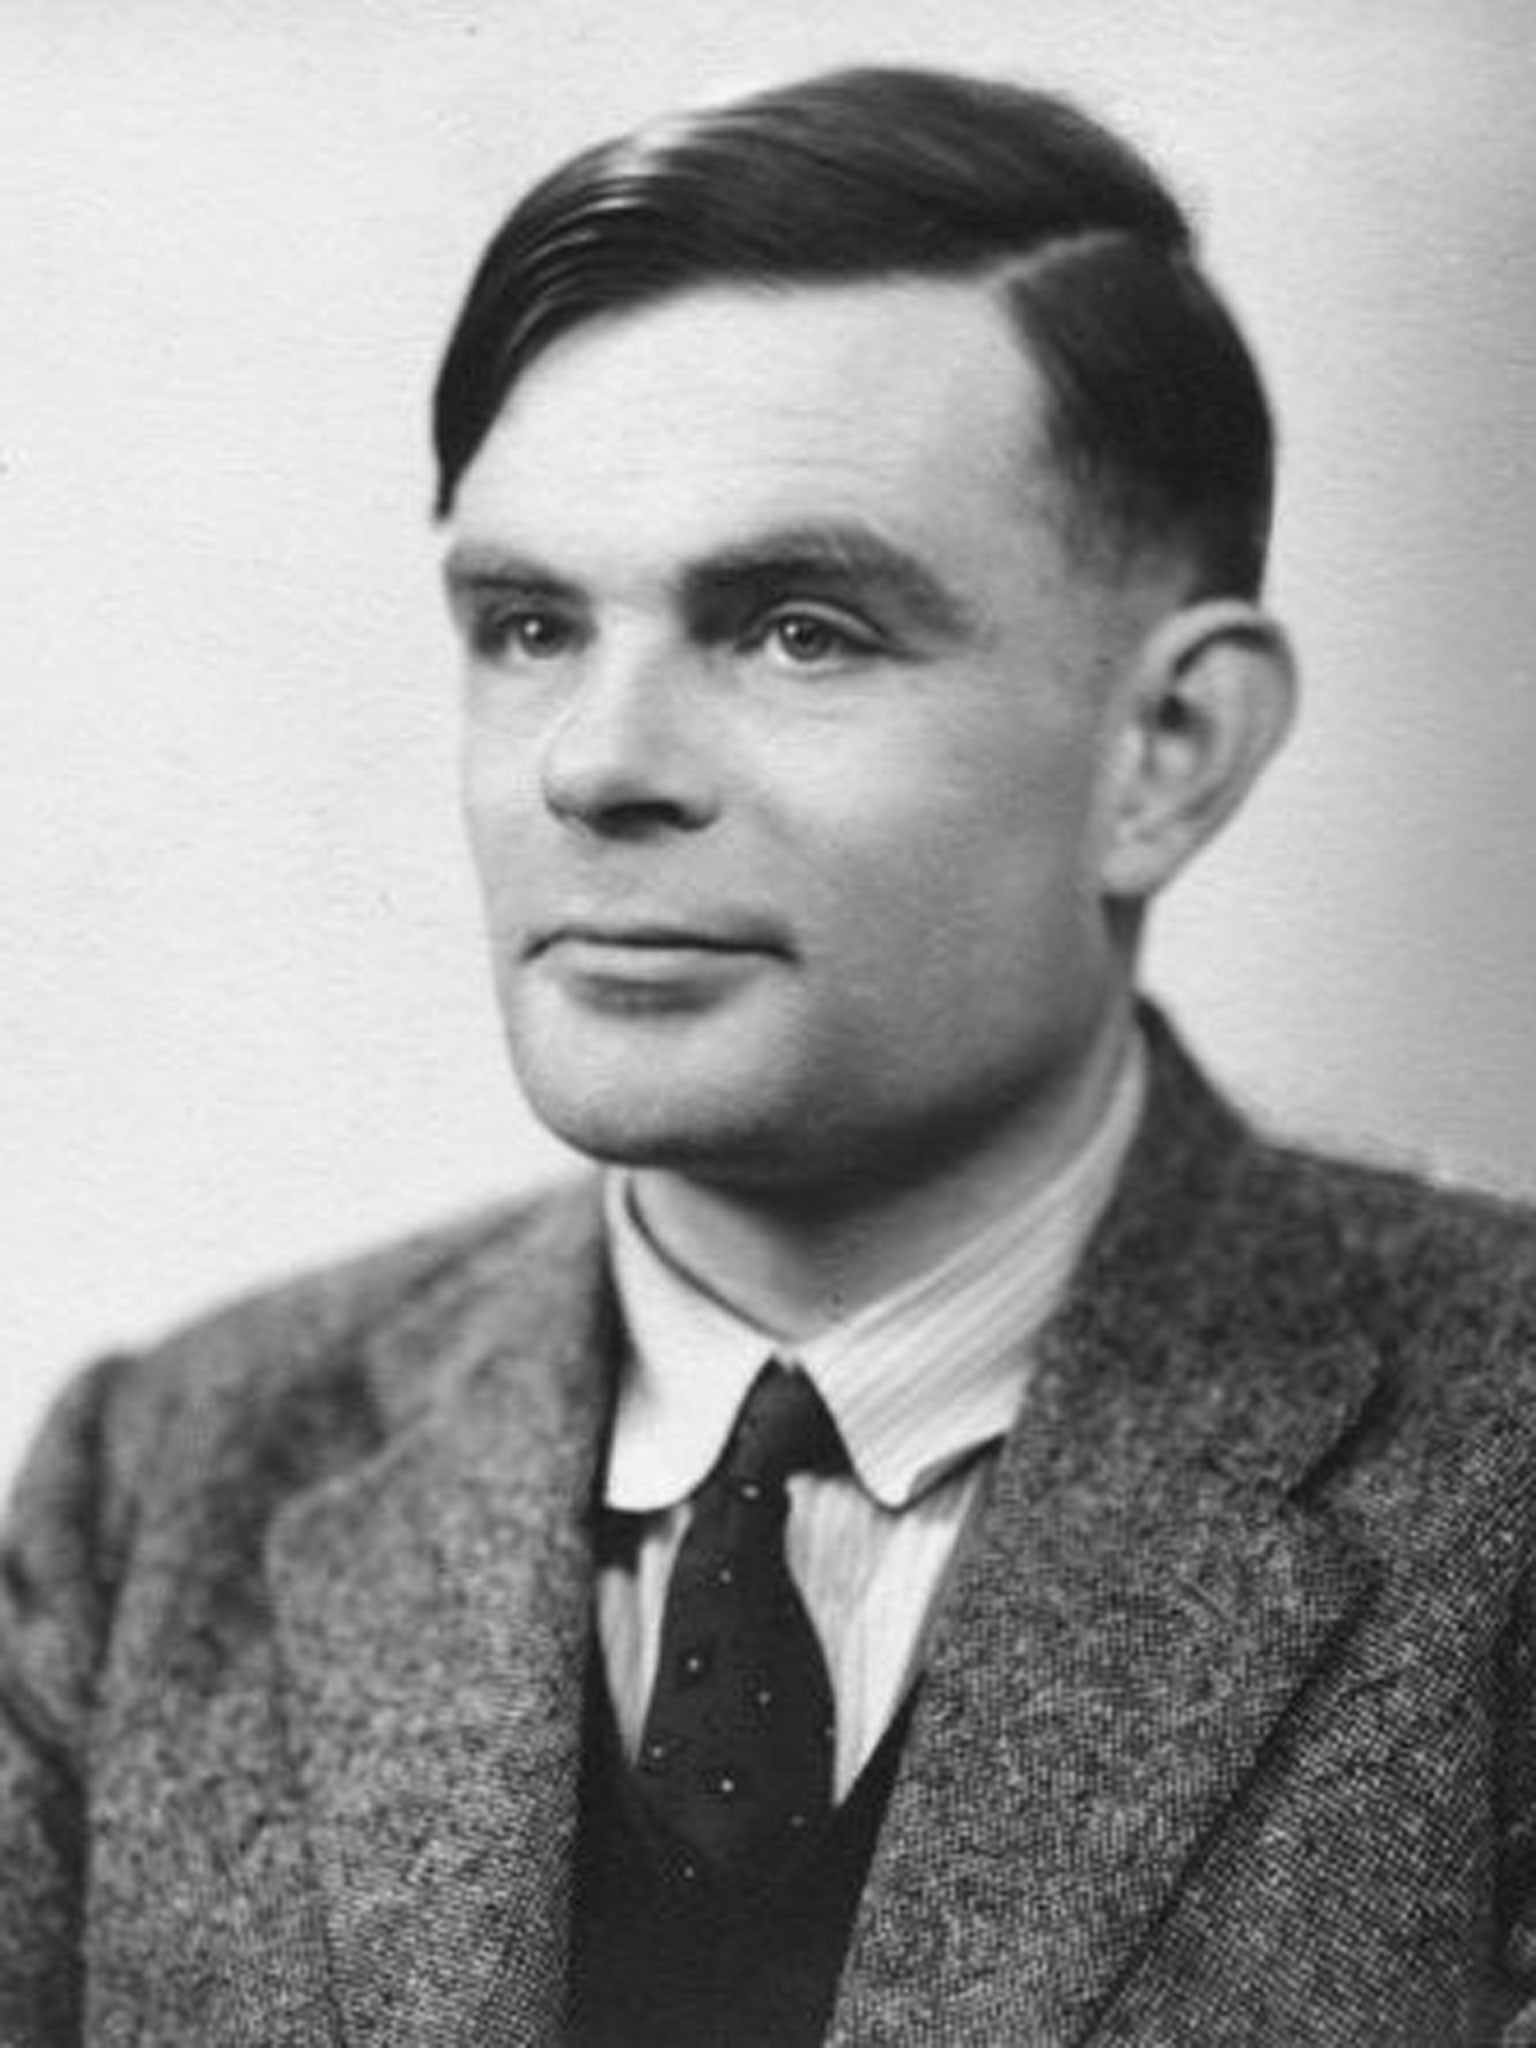 Codebreaker Alan Turing